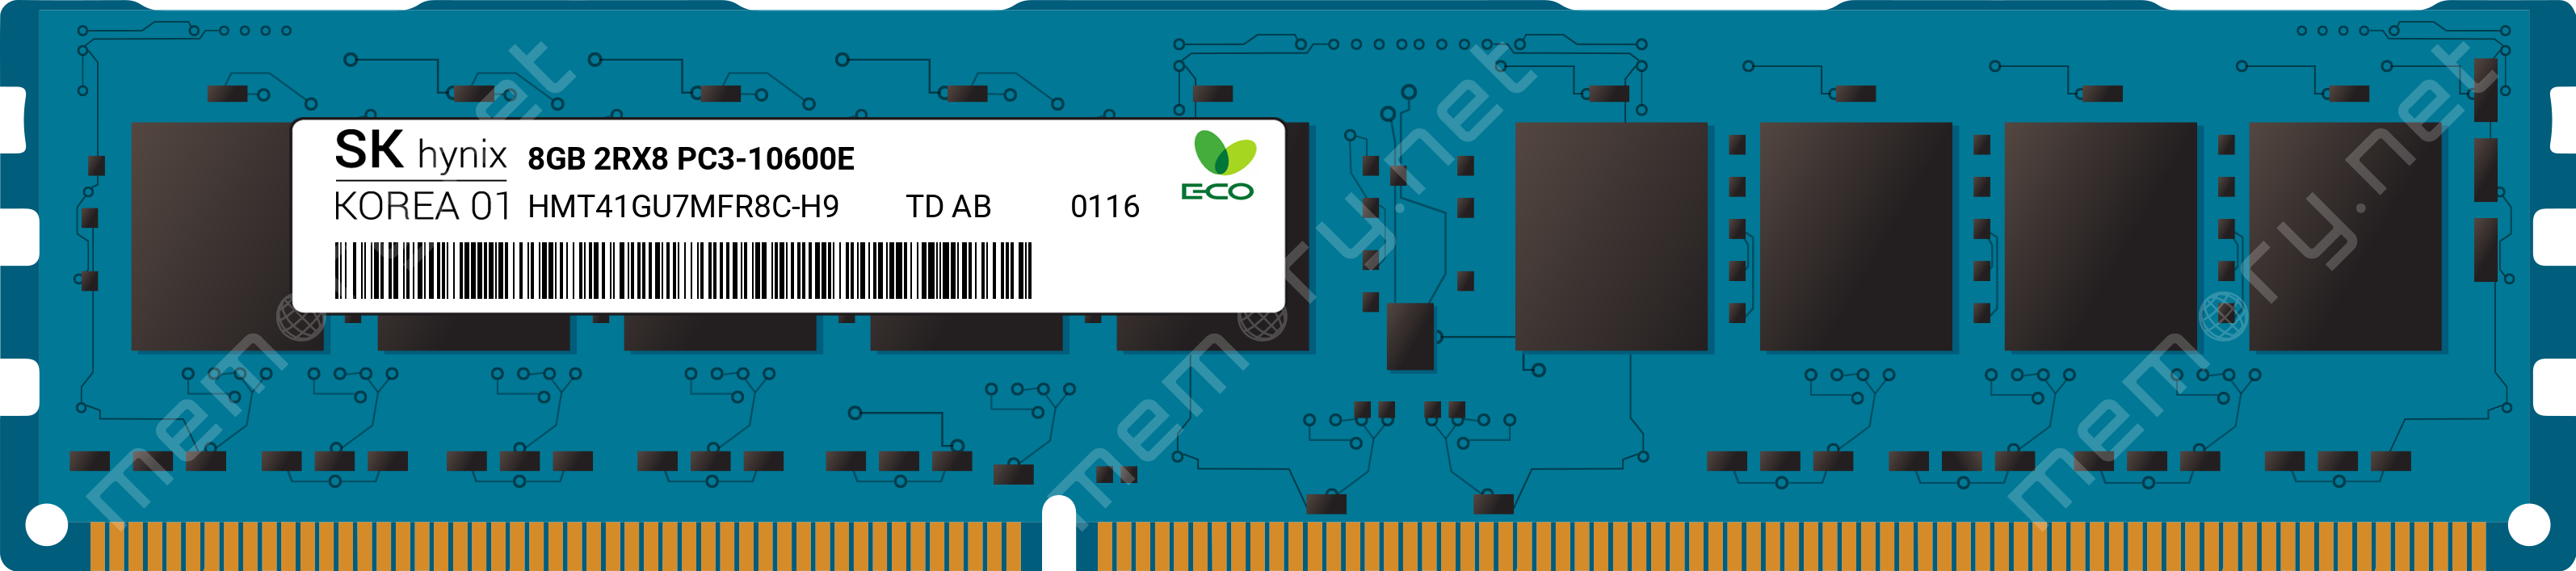 Hynix HMT41GU7MFR8C-H9 equivalente MEMORIA SERVER RAM 8GB PC3-10600E error-correcting CODICE UDIMM 